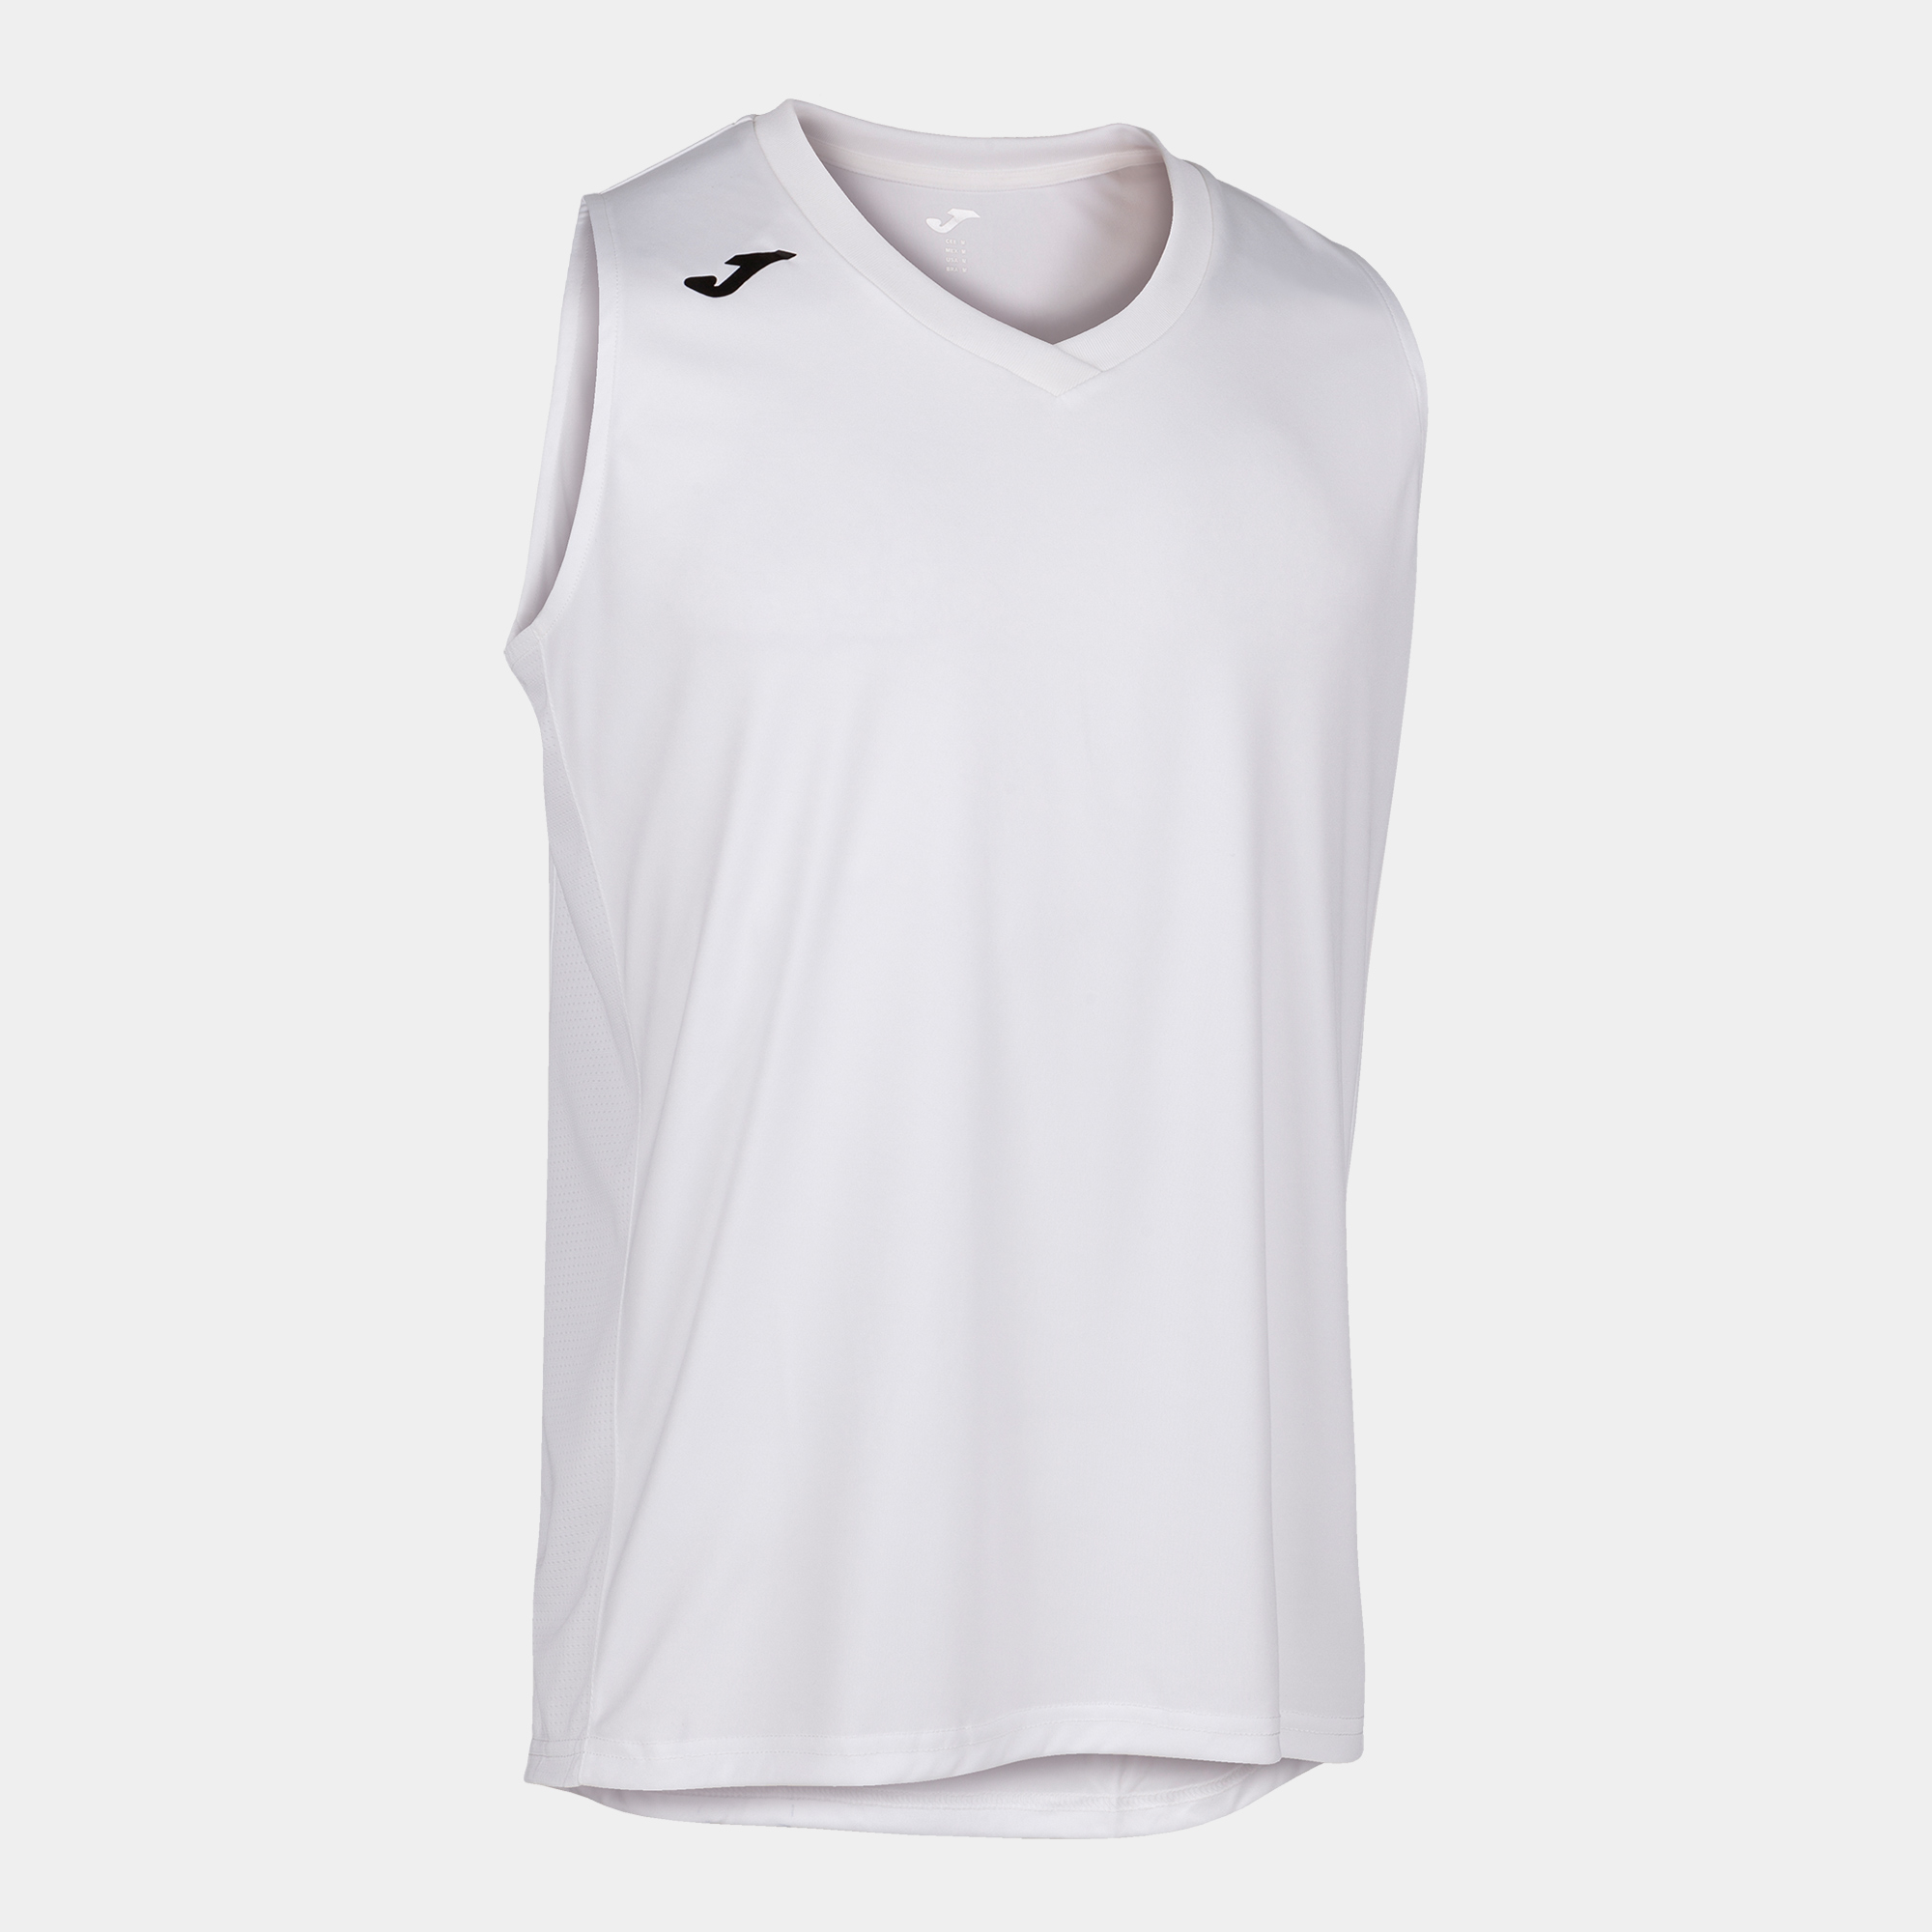 Camiseta Joma Tiger IV blanco negro - Tejido de raglán - Zona de Padel